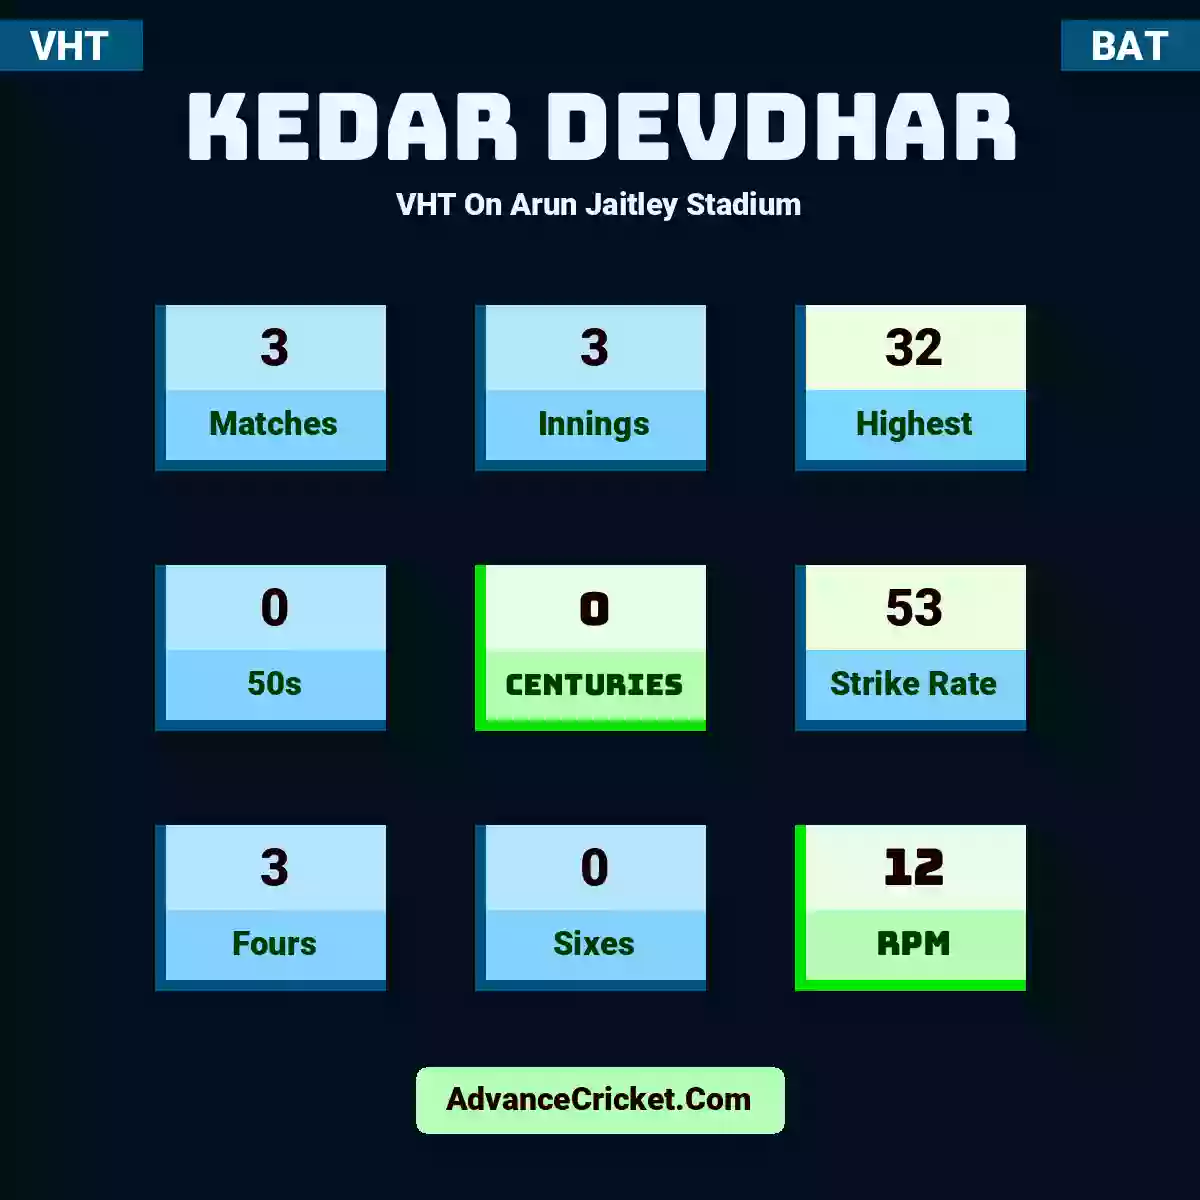 Kedar Devdhar VHT  On Arun Jaitley Stadium, Kedar Devdhar played 3 matches, scored 32 runs as highest, 0 half-centuries, and 0 centuries, with a strike rate of 53. K.Devdhar hit 3 fours and 0 sixes, with an RPM of 12.